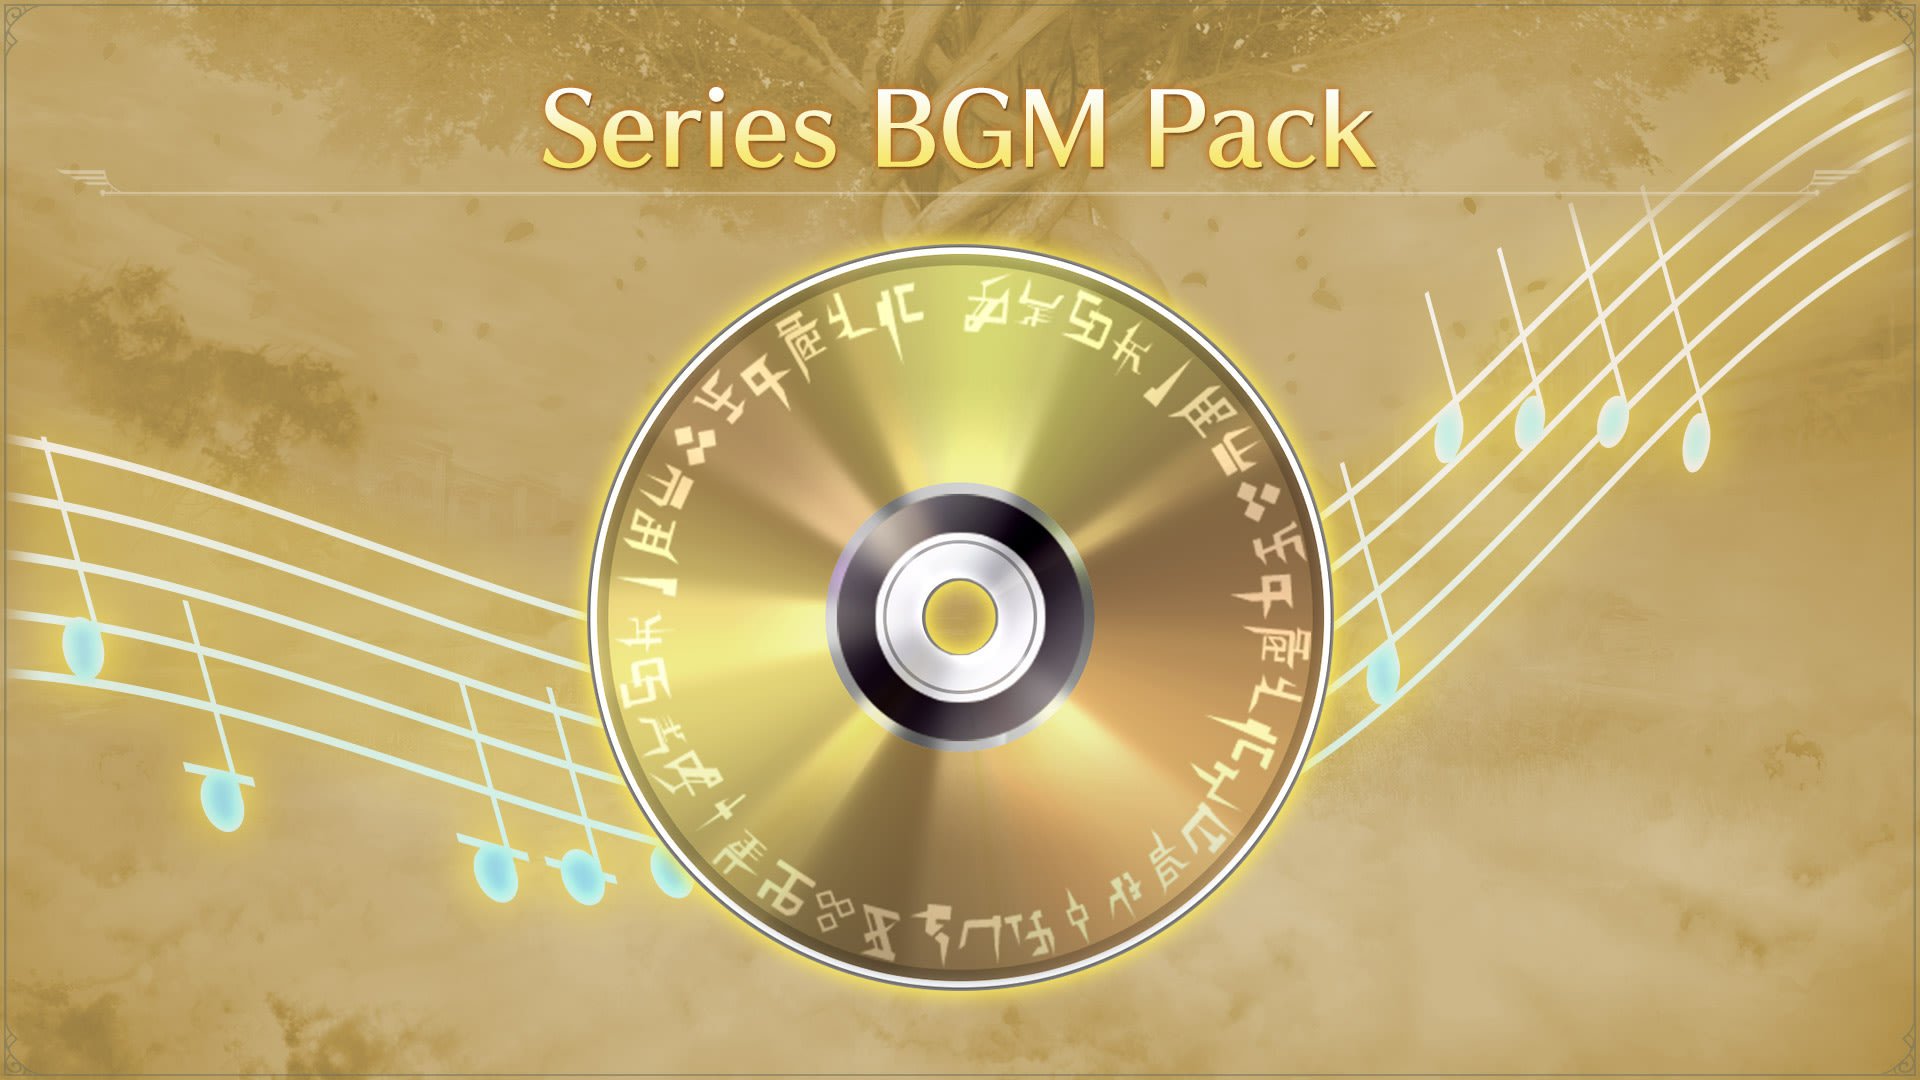 Series BGM Pack